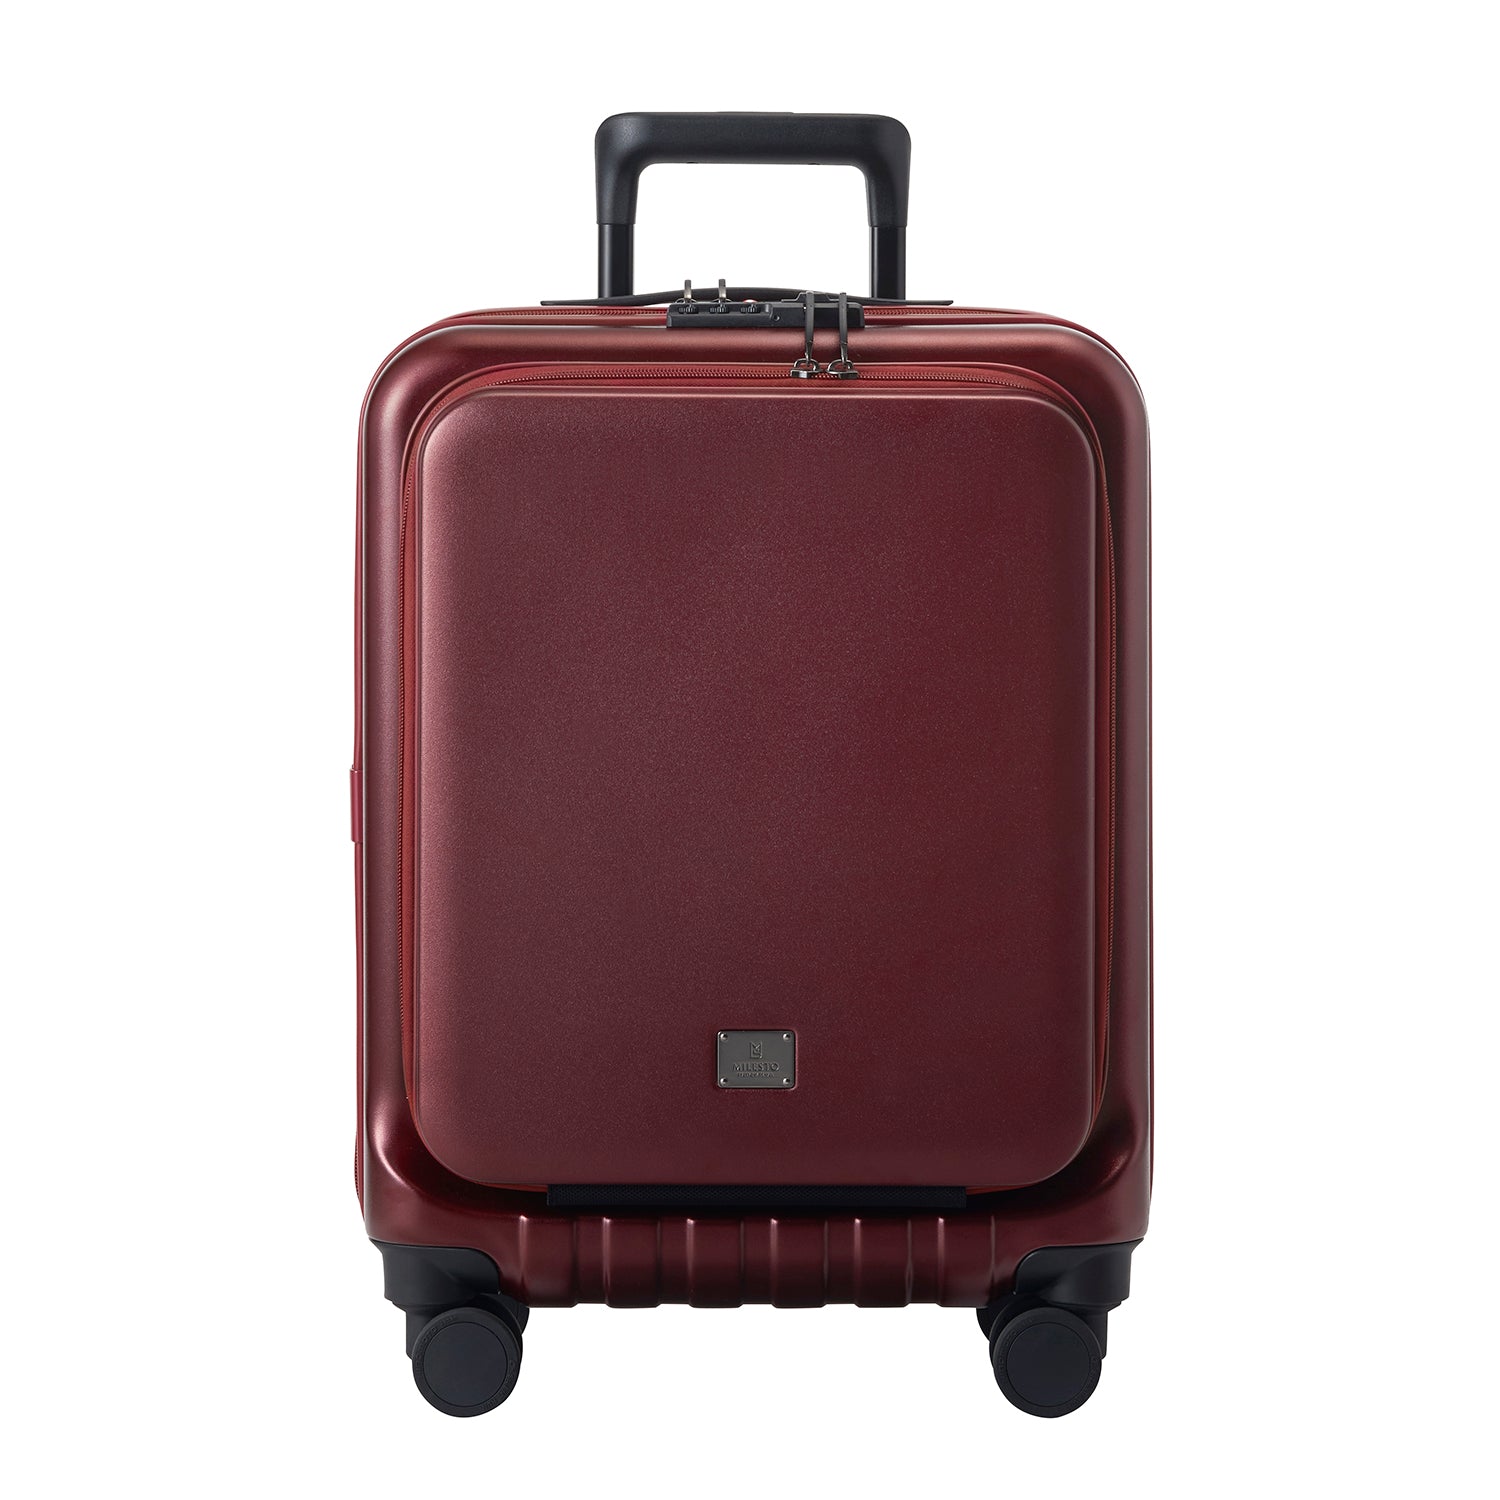 MILESTO UTILITY 前揭式手提行李箱 31L - 紅色 MLS589-RD